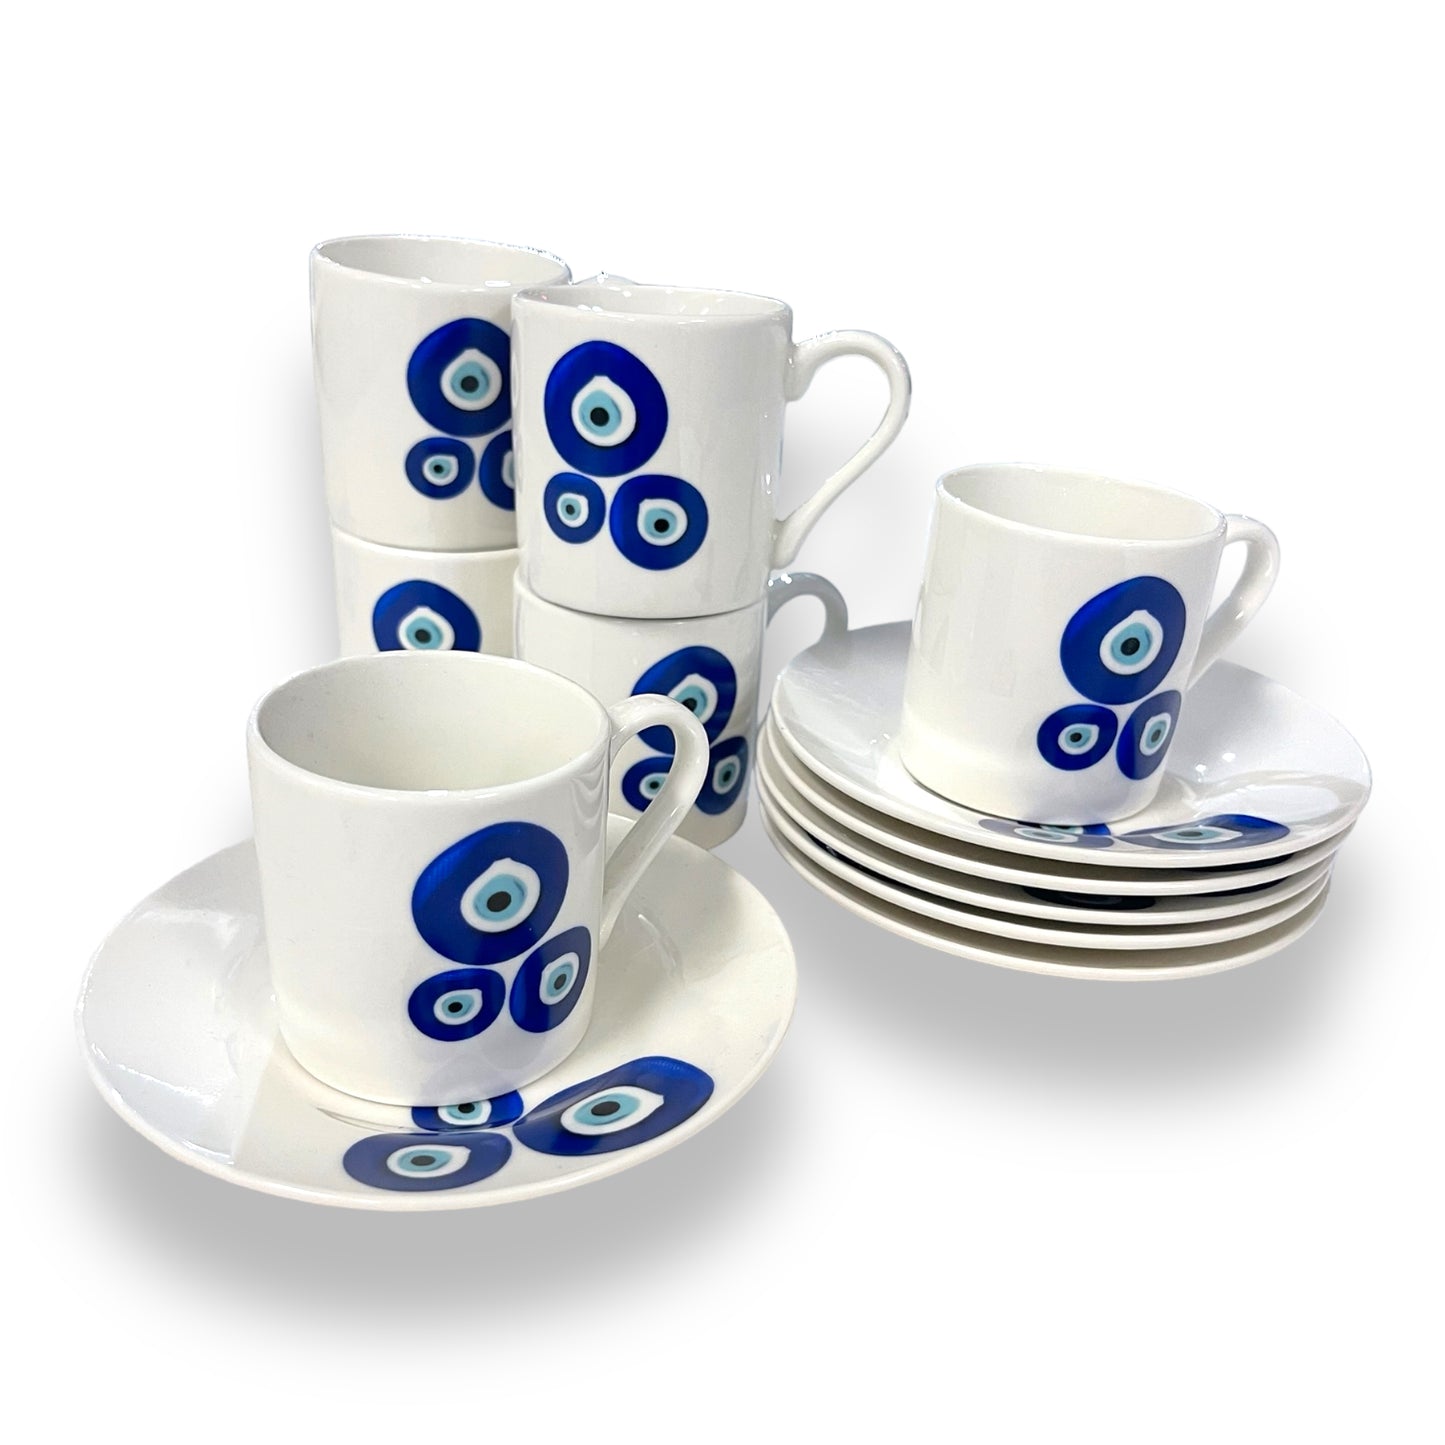 12 pieces porcelain set evil eye coffee/tea set